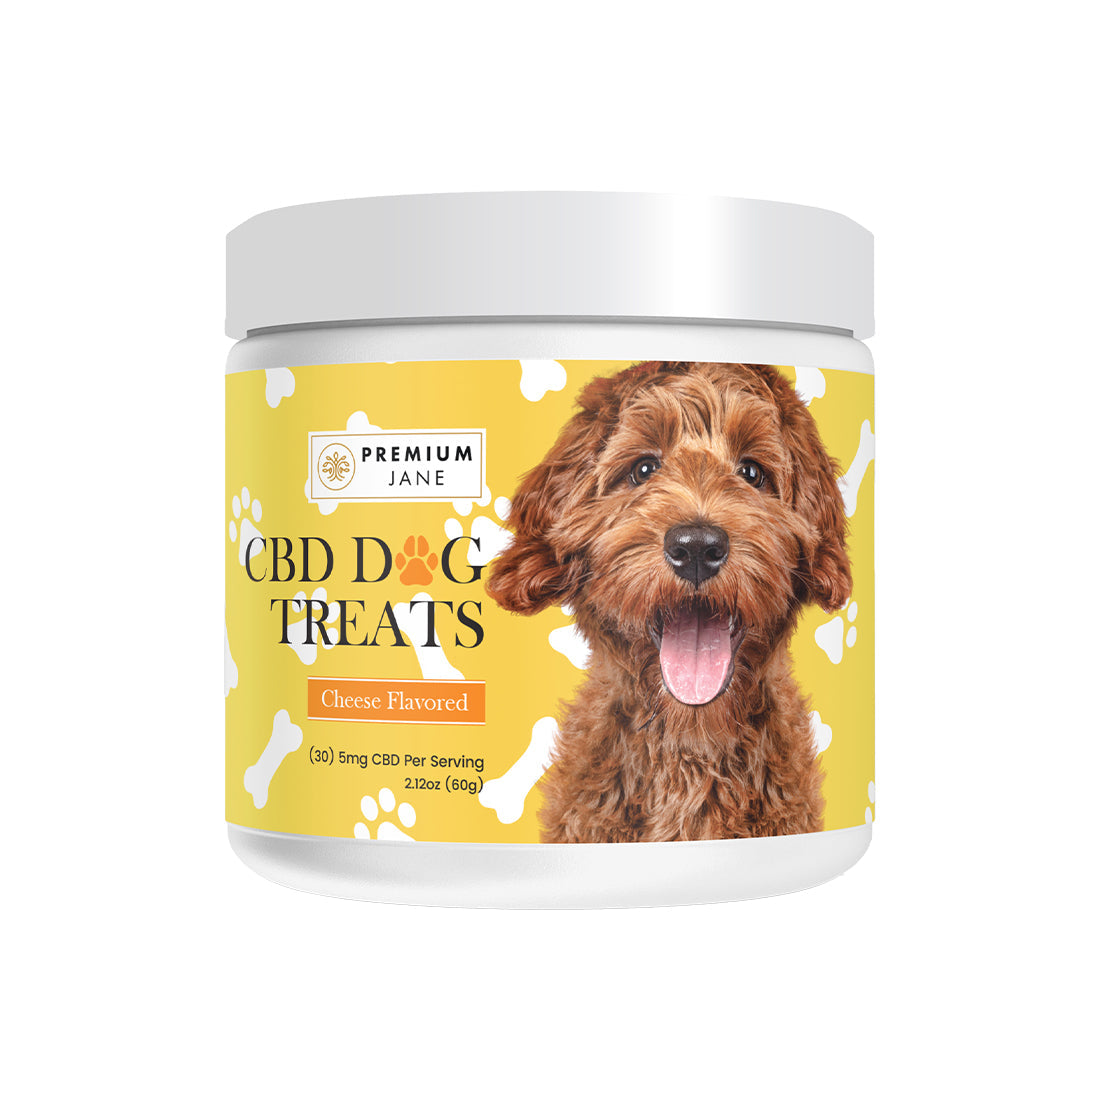 Premium Jane CBD Dog Treats – 150mg (Cheese Flavored)